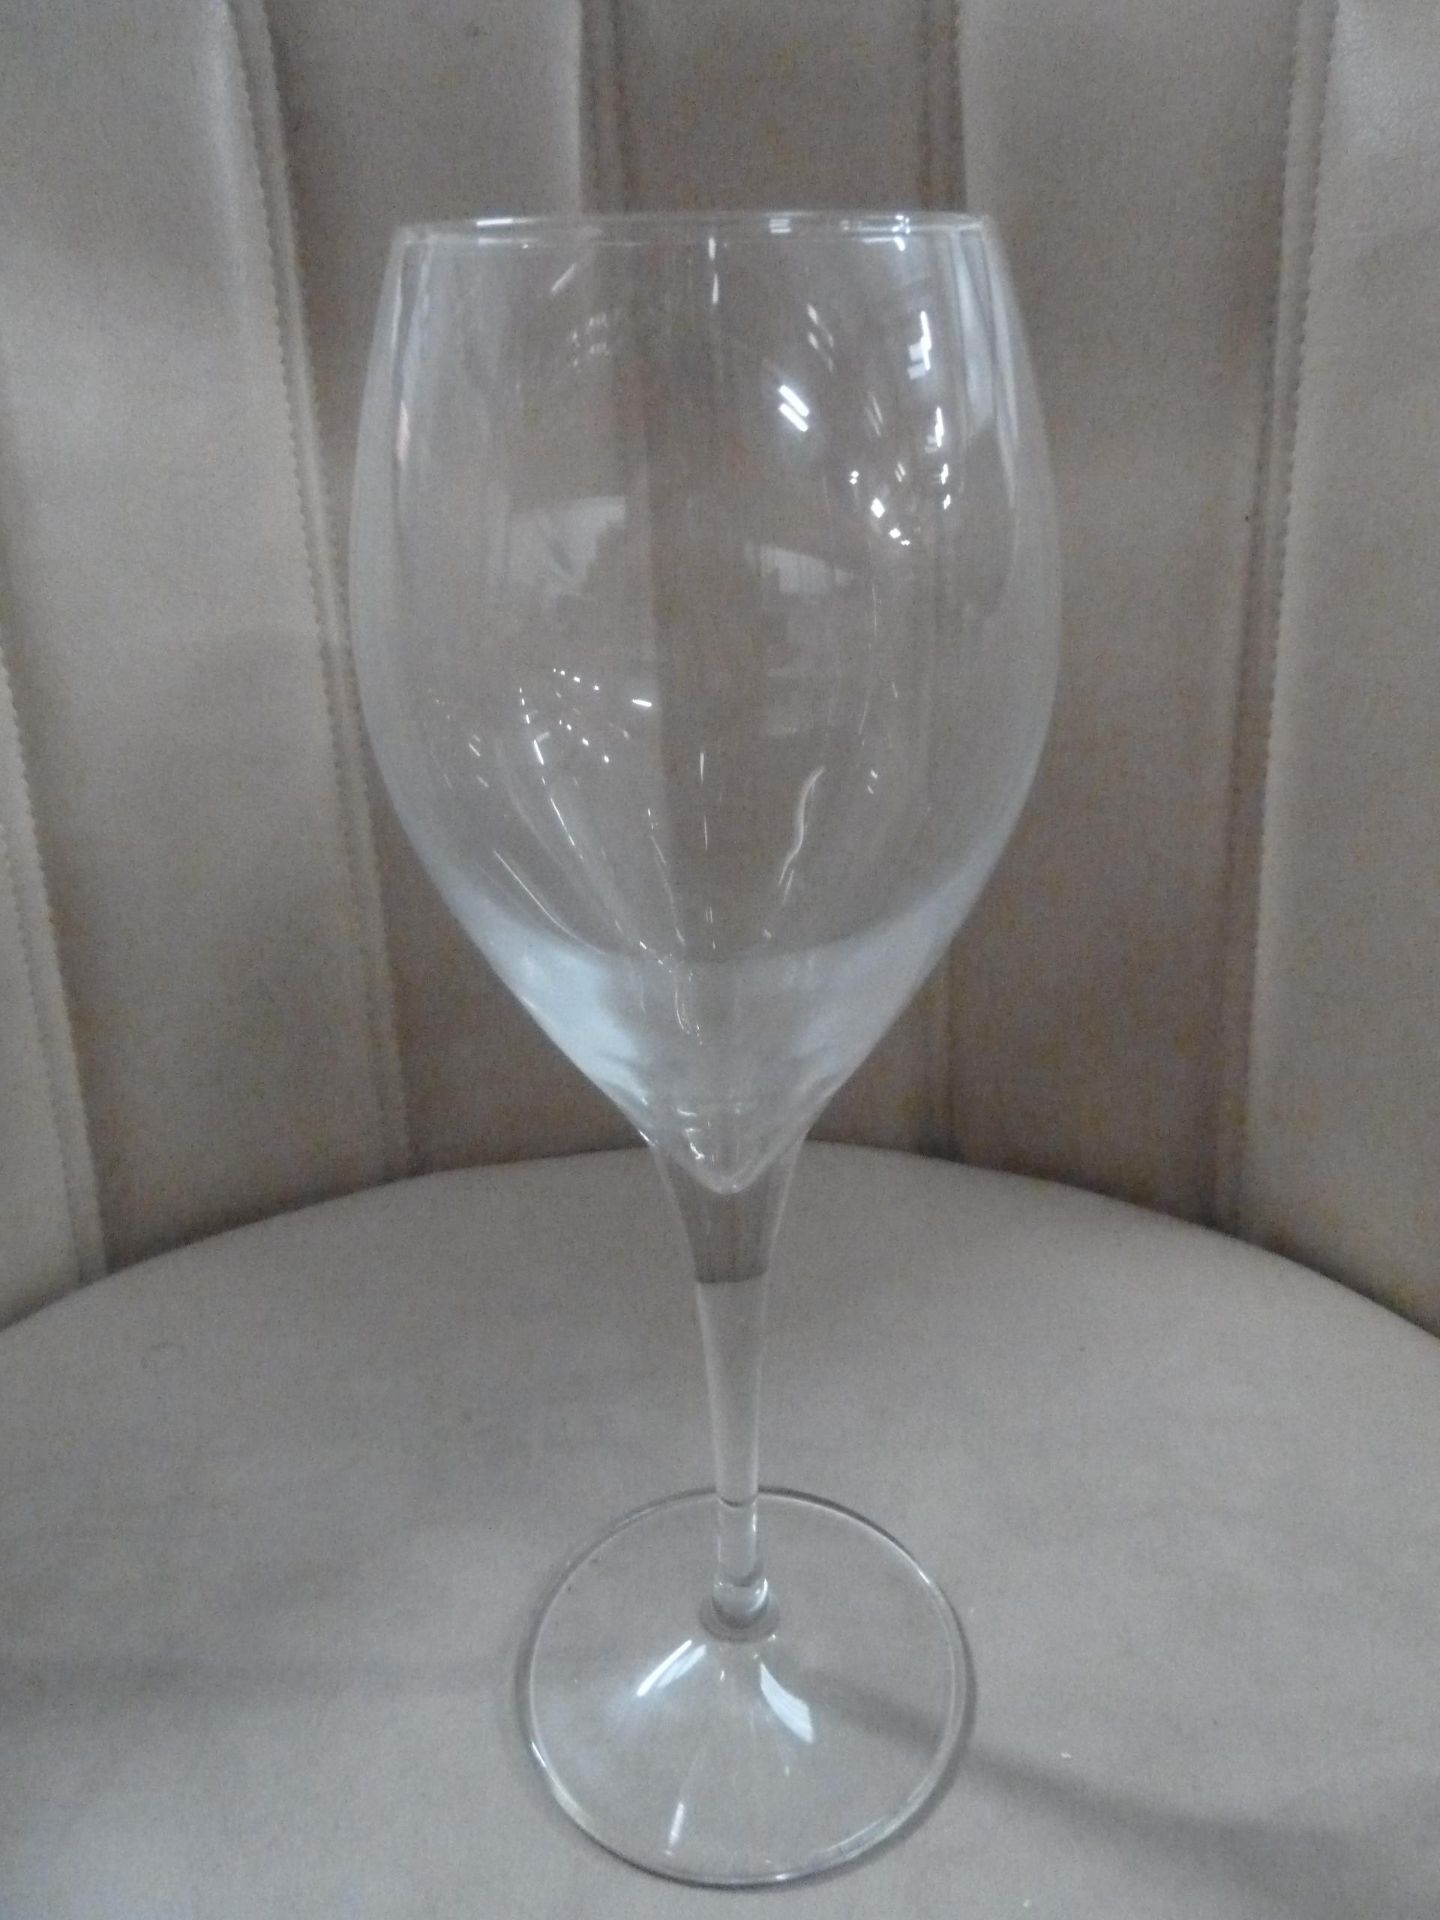 *8 x boxed wine glasses with elegant stem